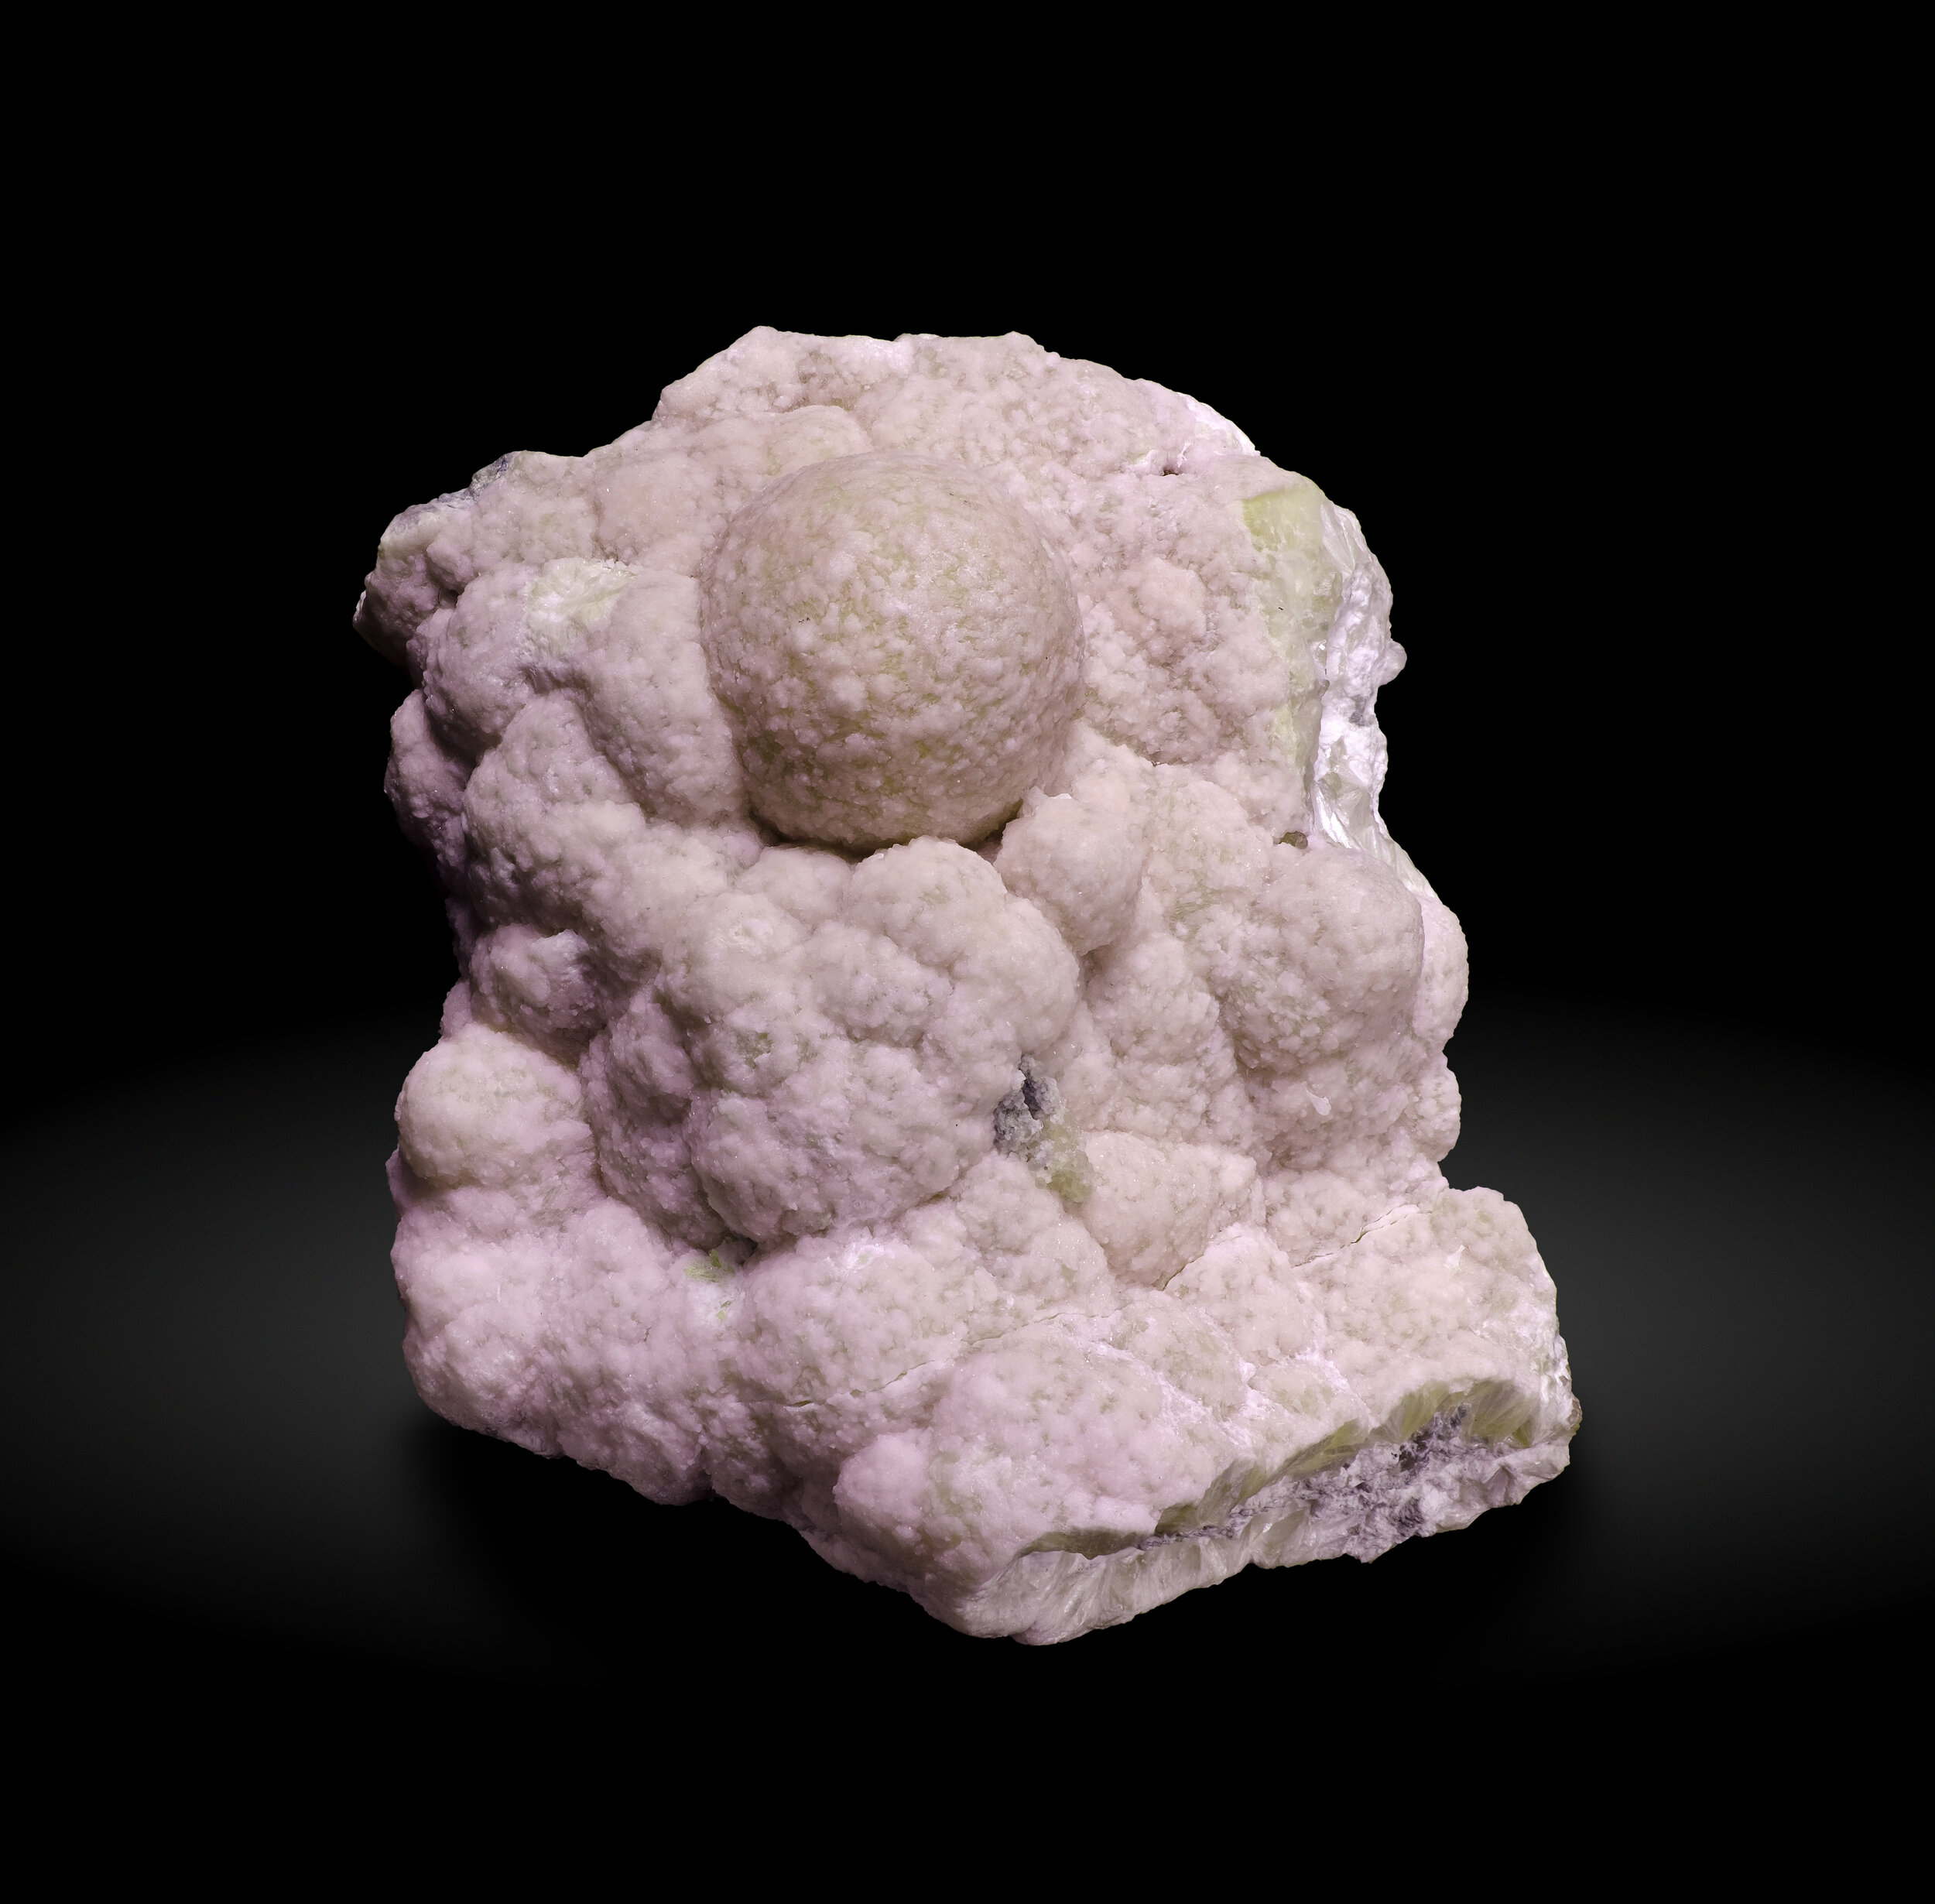 specimens/s_imagesAO2/Bultfonteinite-MHR27AO2_6166_f.jpg